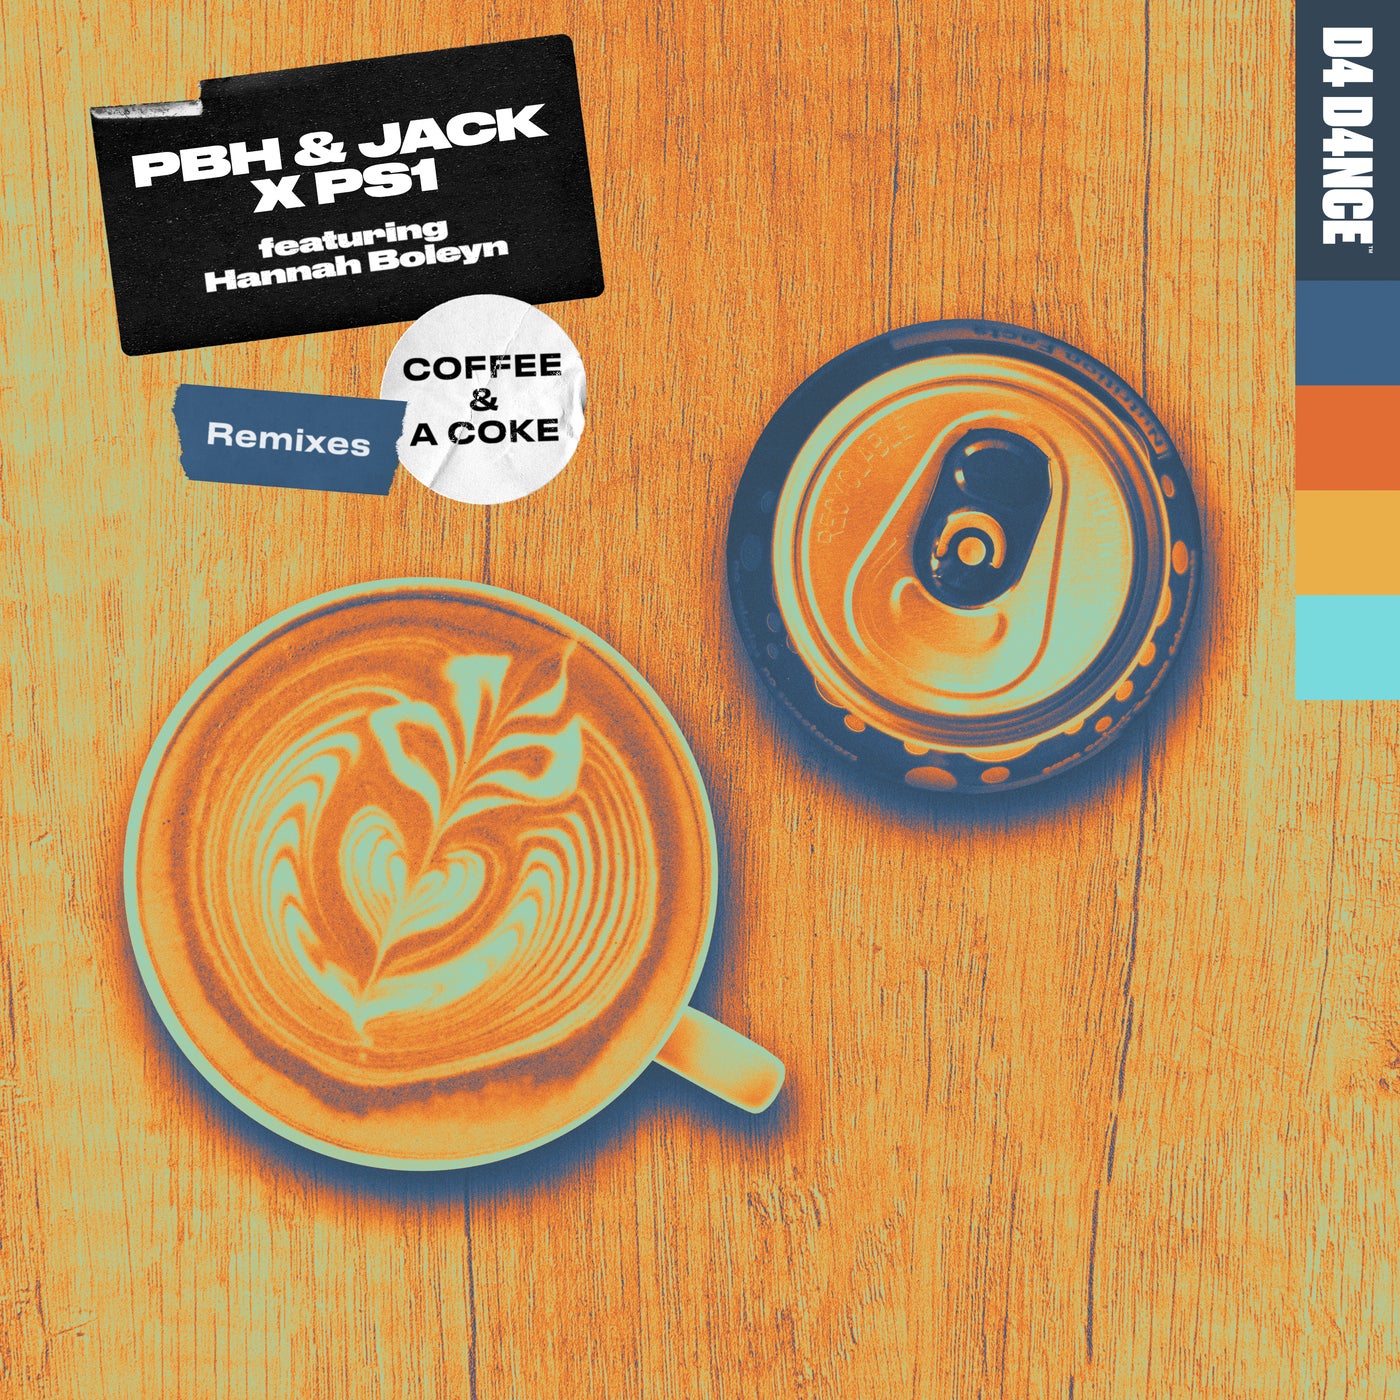 PS1, PBH & Jack - COFFEE & A COKE - REMIXES [D4D0004D4]